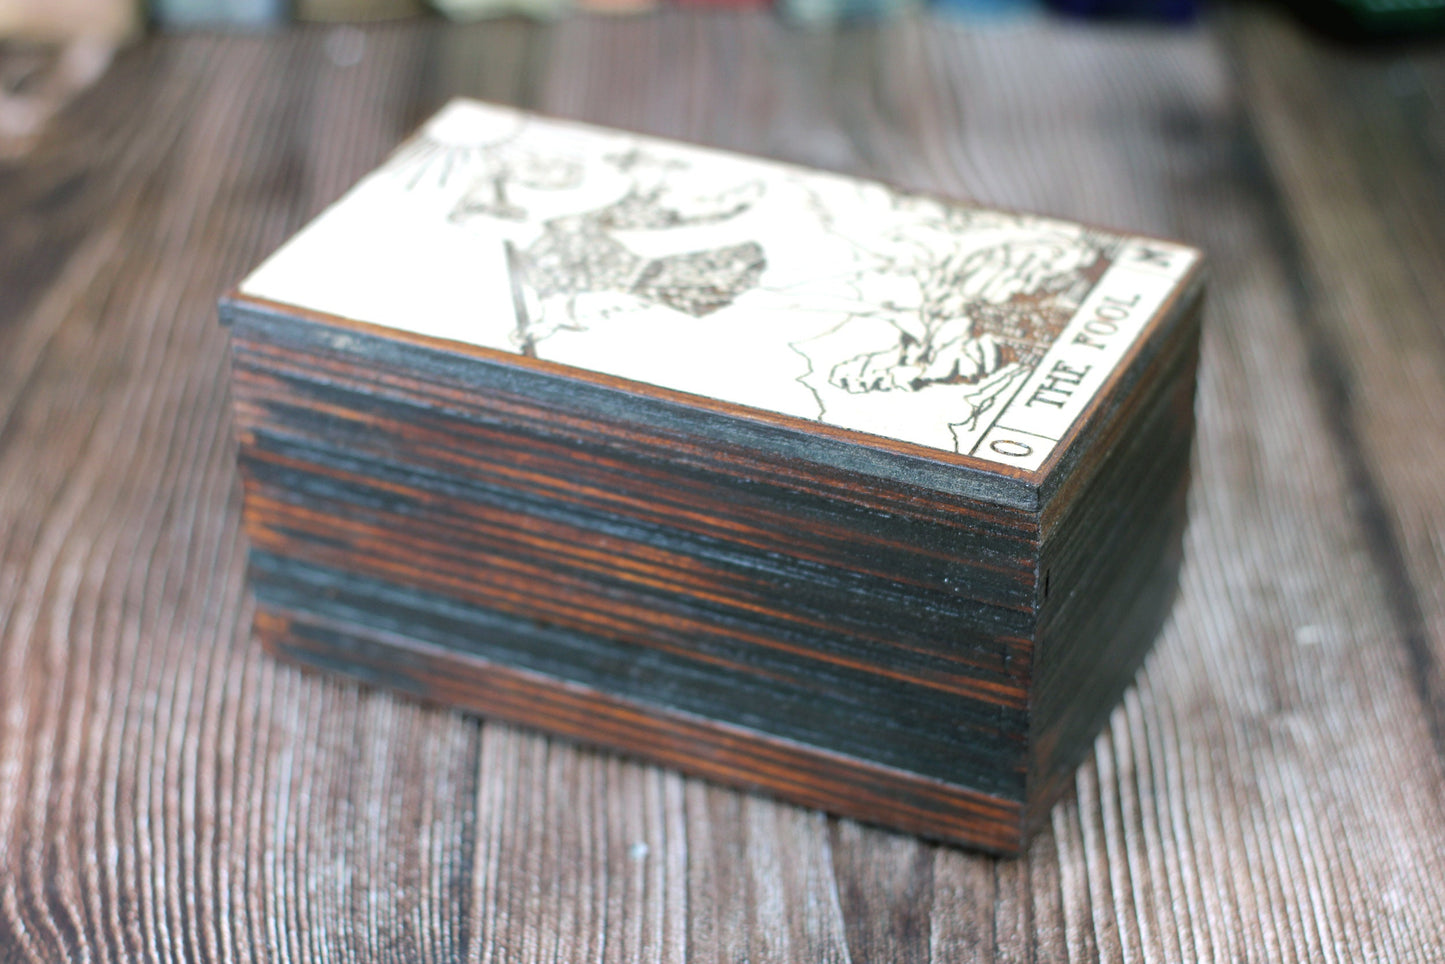 Wooden Tarot card jewelry box with The Fool card design. A handmade keepsake box for trinkets or jewellery.